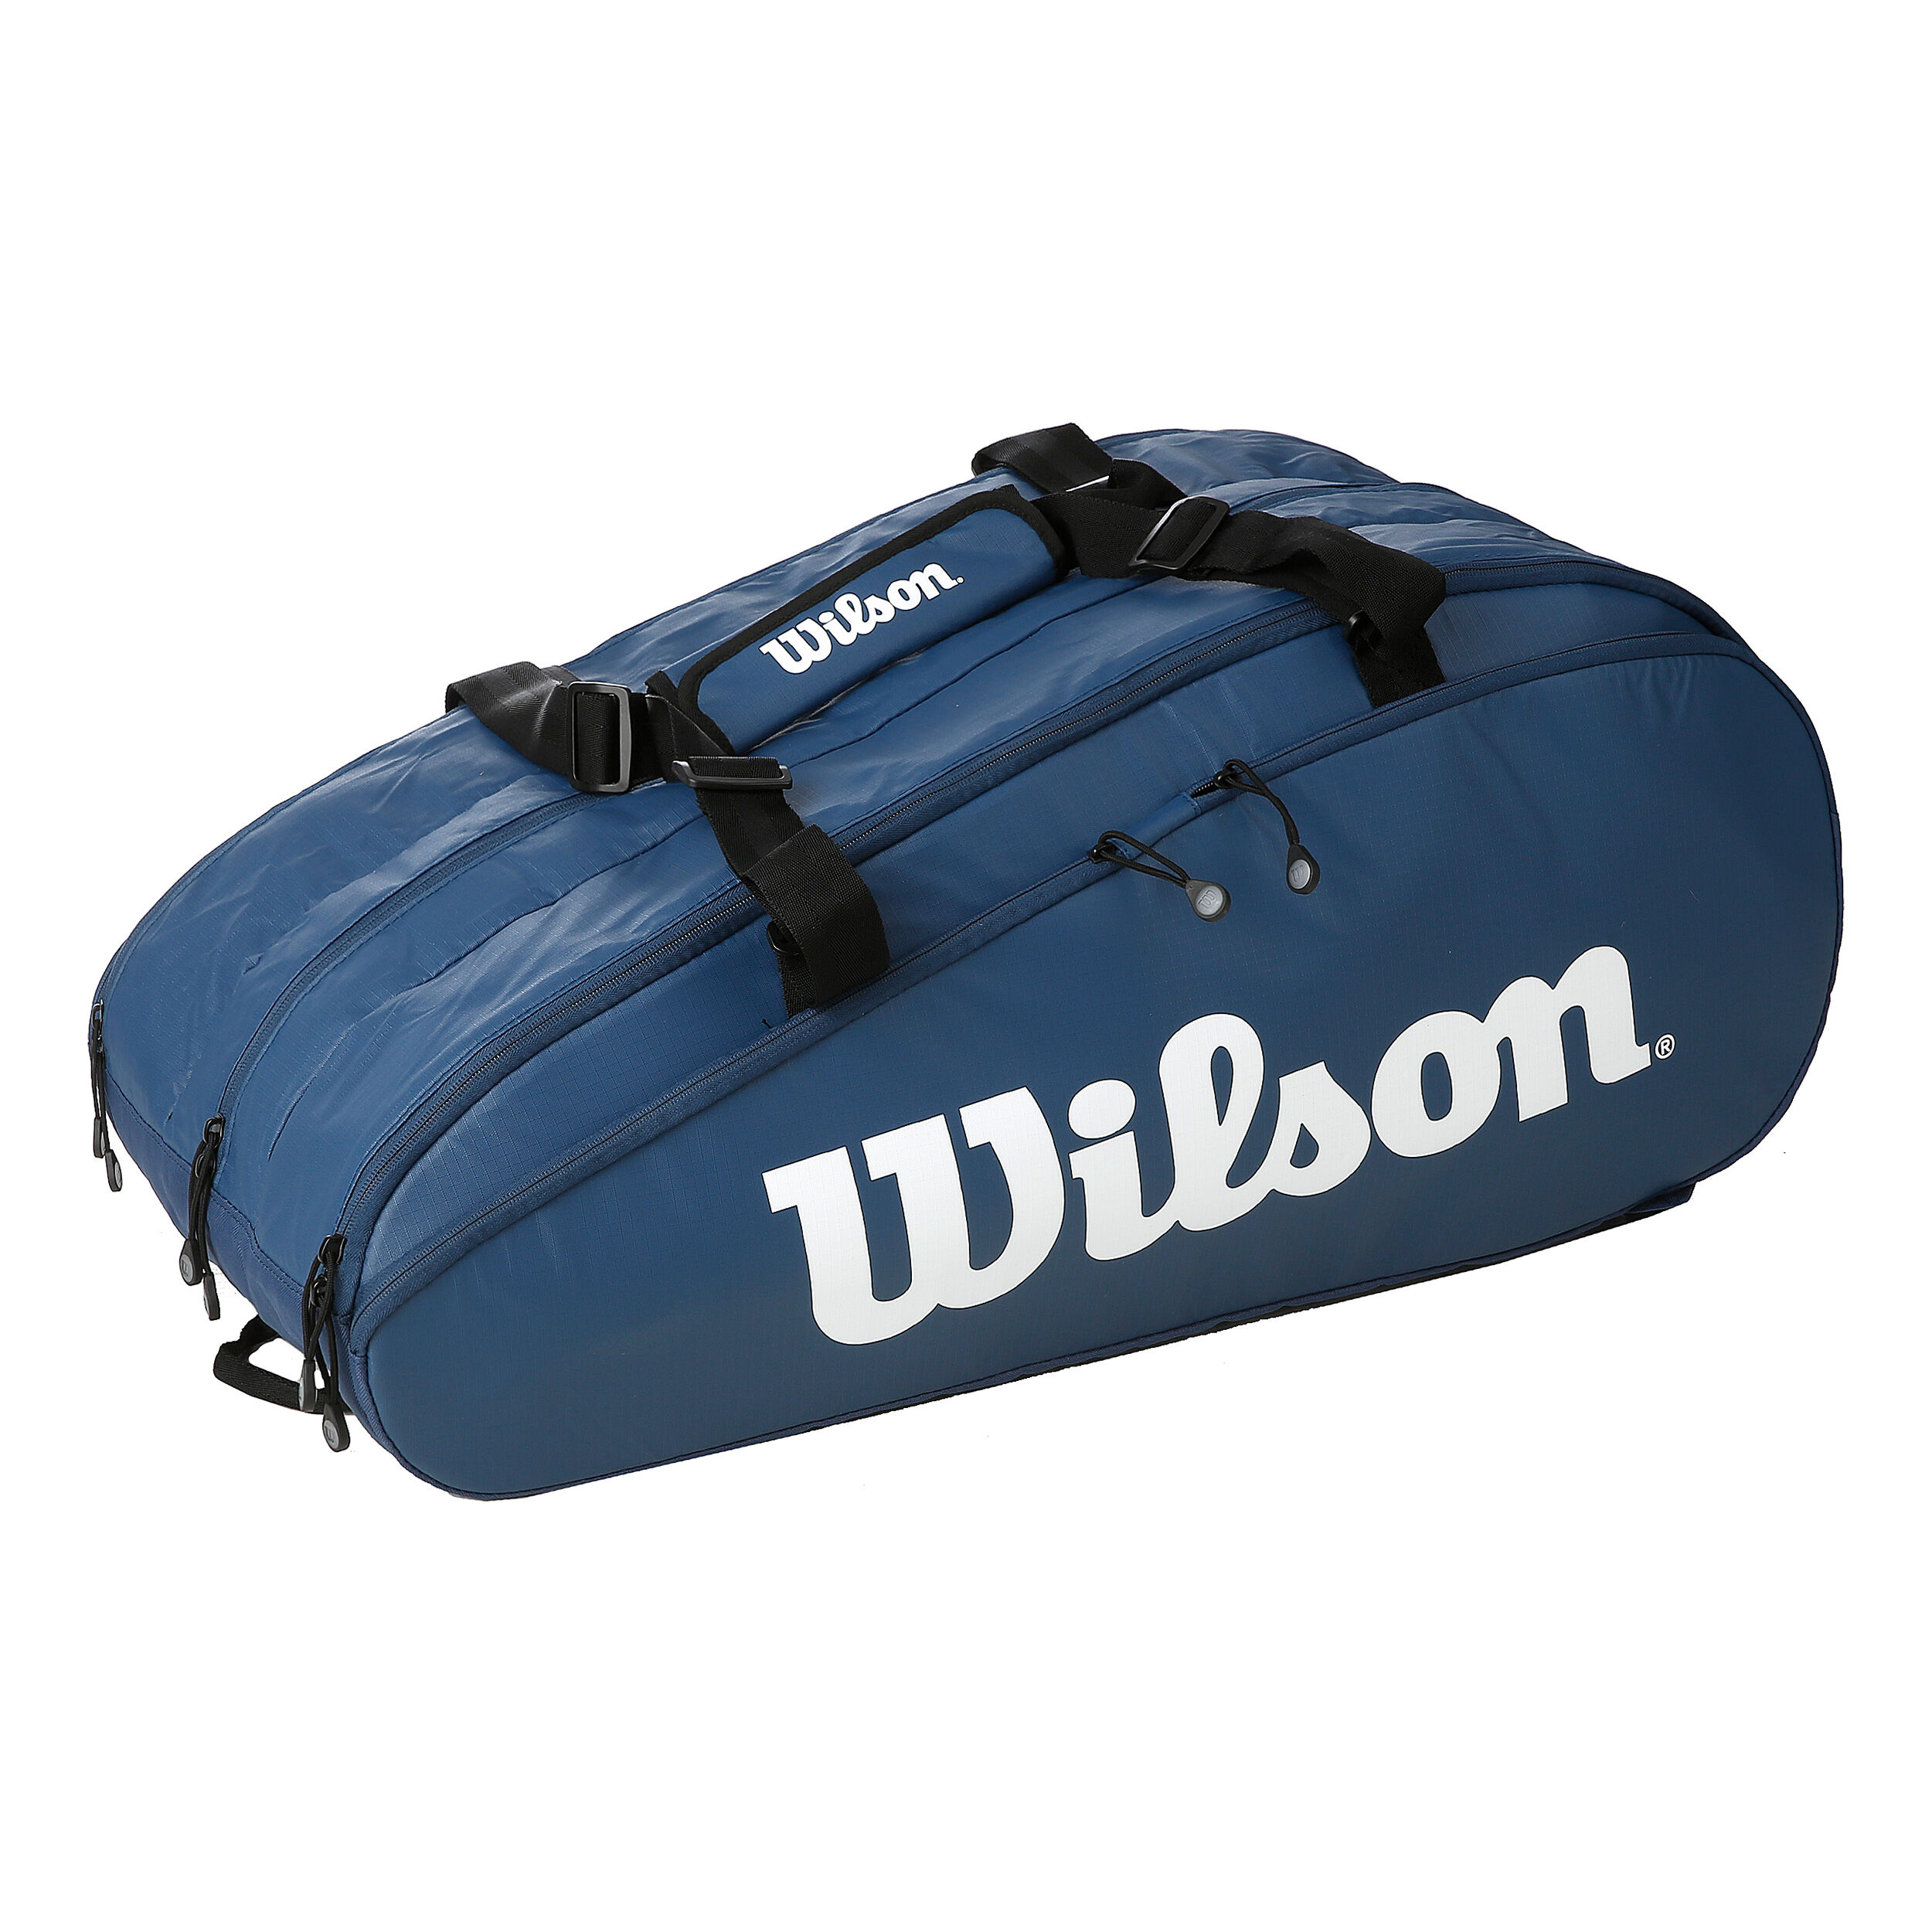 Wilson Tour 3 Comp Tennistasche blau NEU UVP 100,00€ 